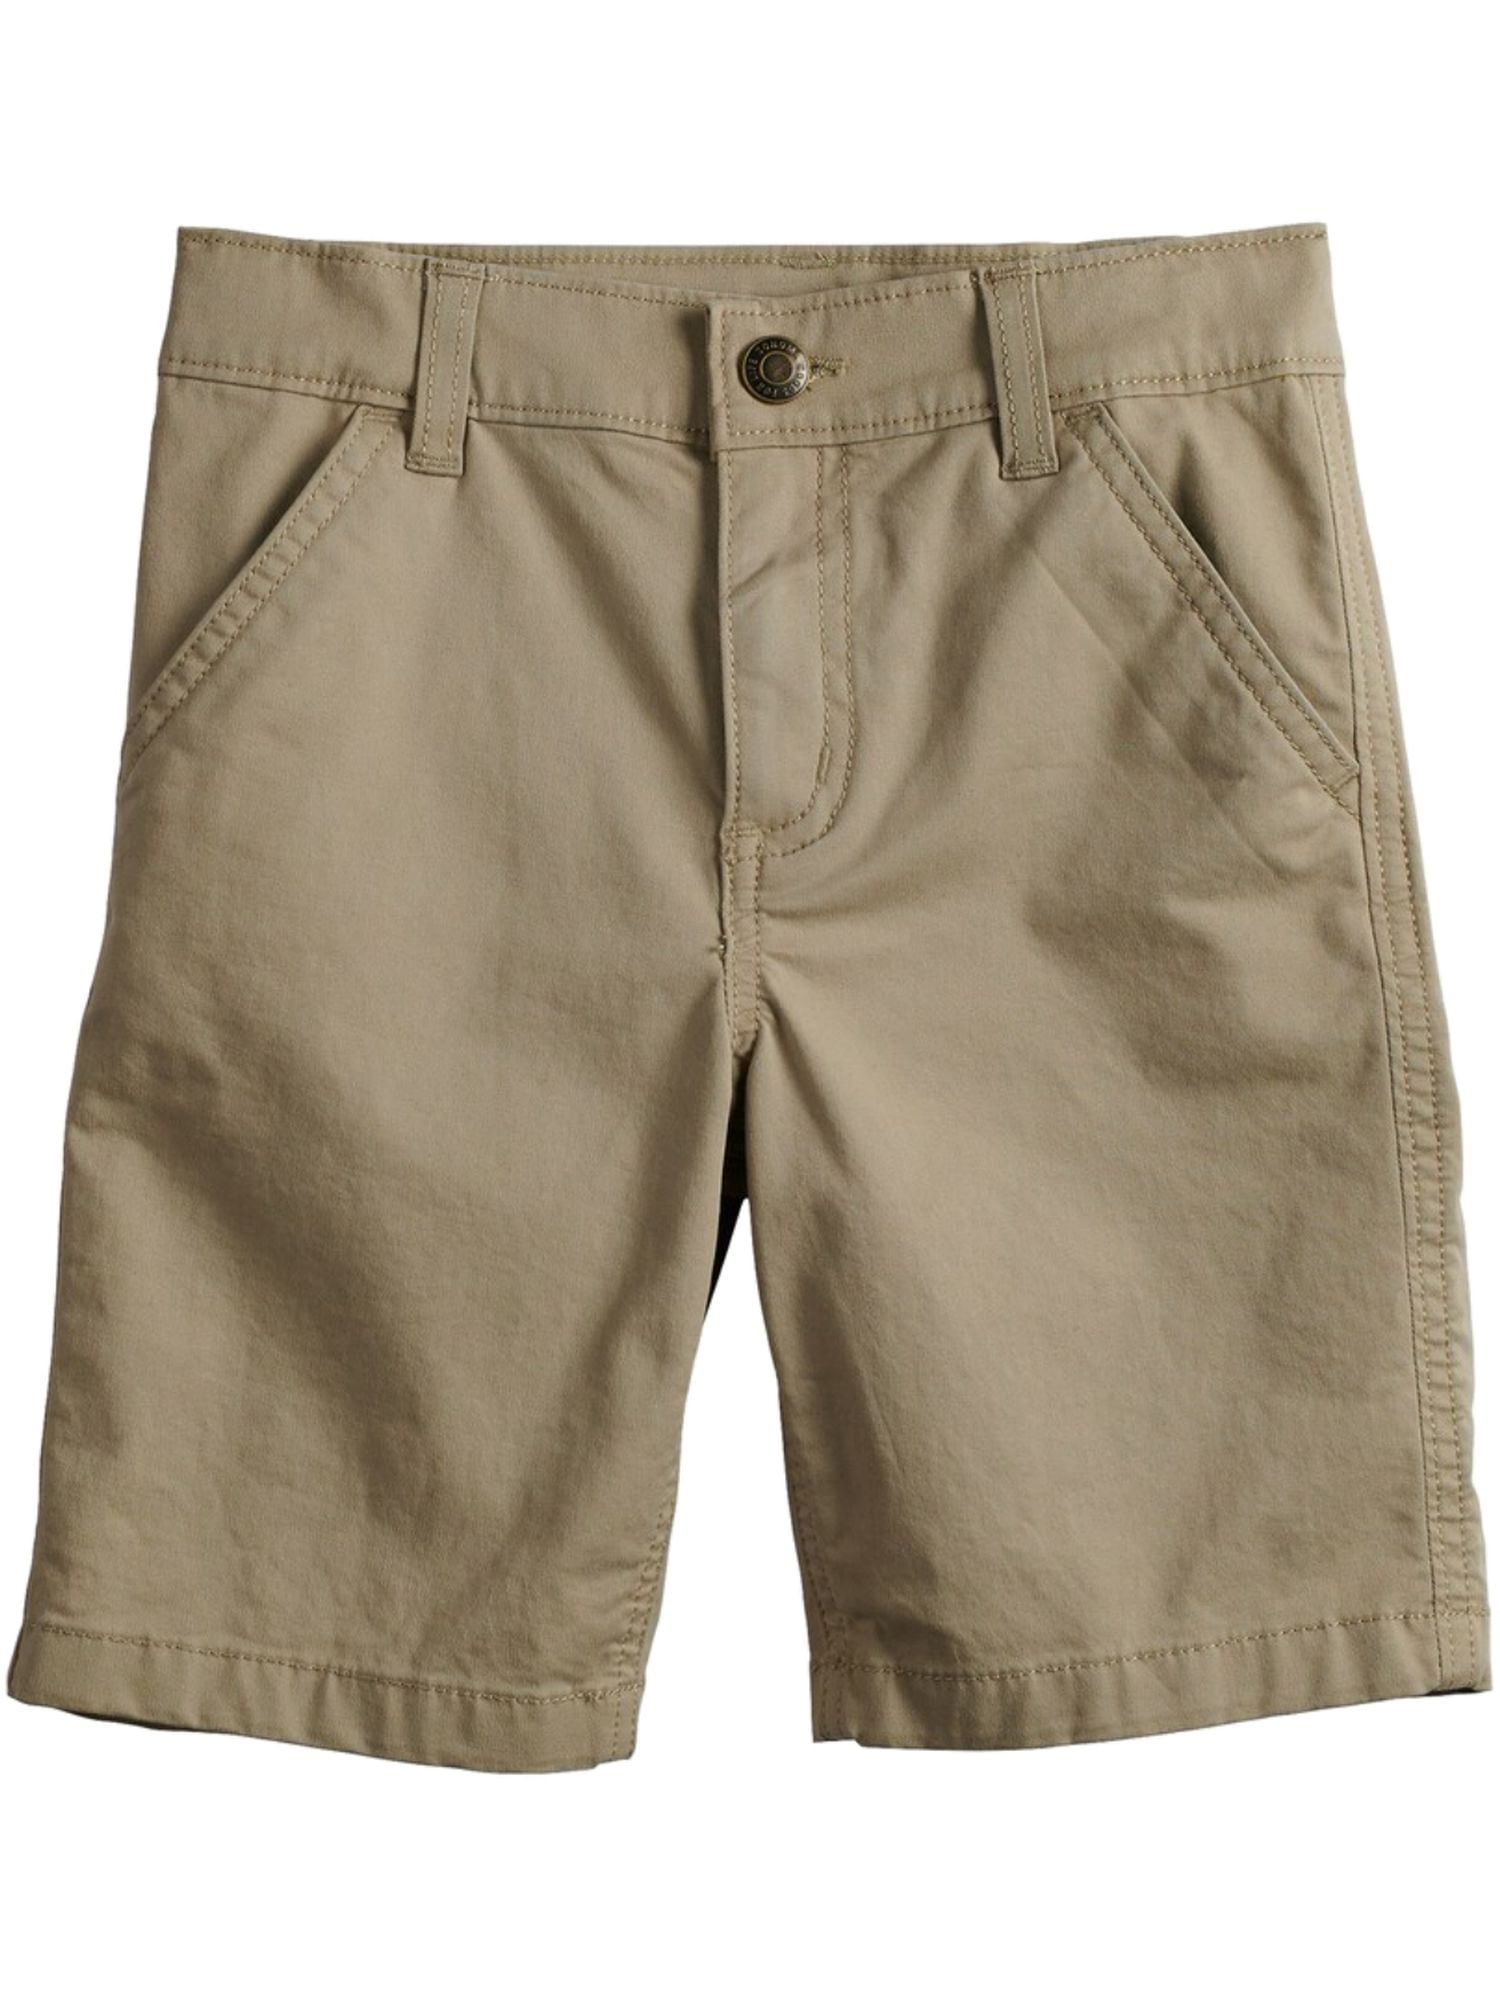 6-7 Boys Wonder Nation Gray Tough Core Drawstring Shorts Size S School Approv 